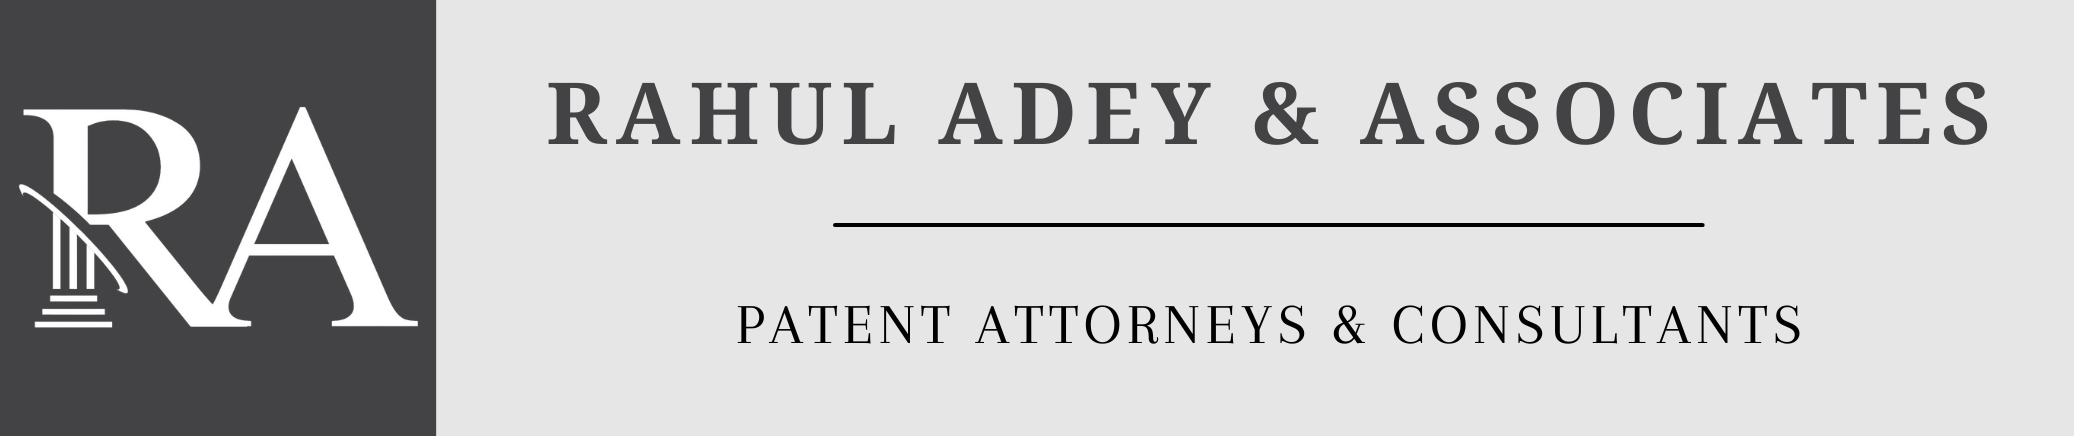 Rahul Adey & Associates